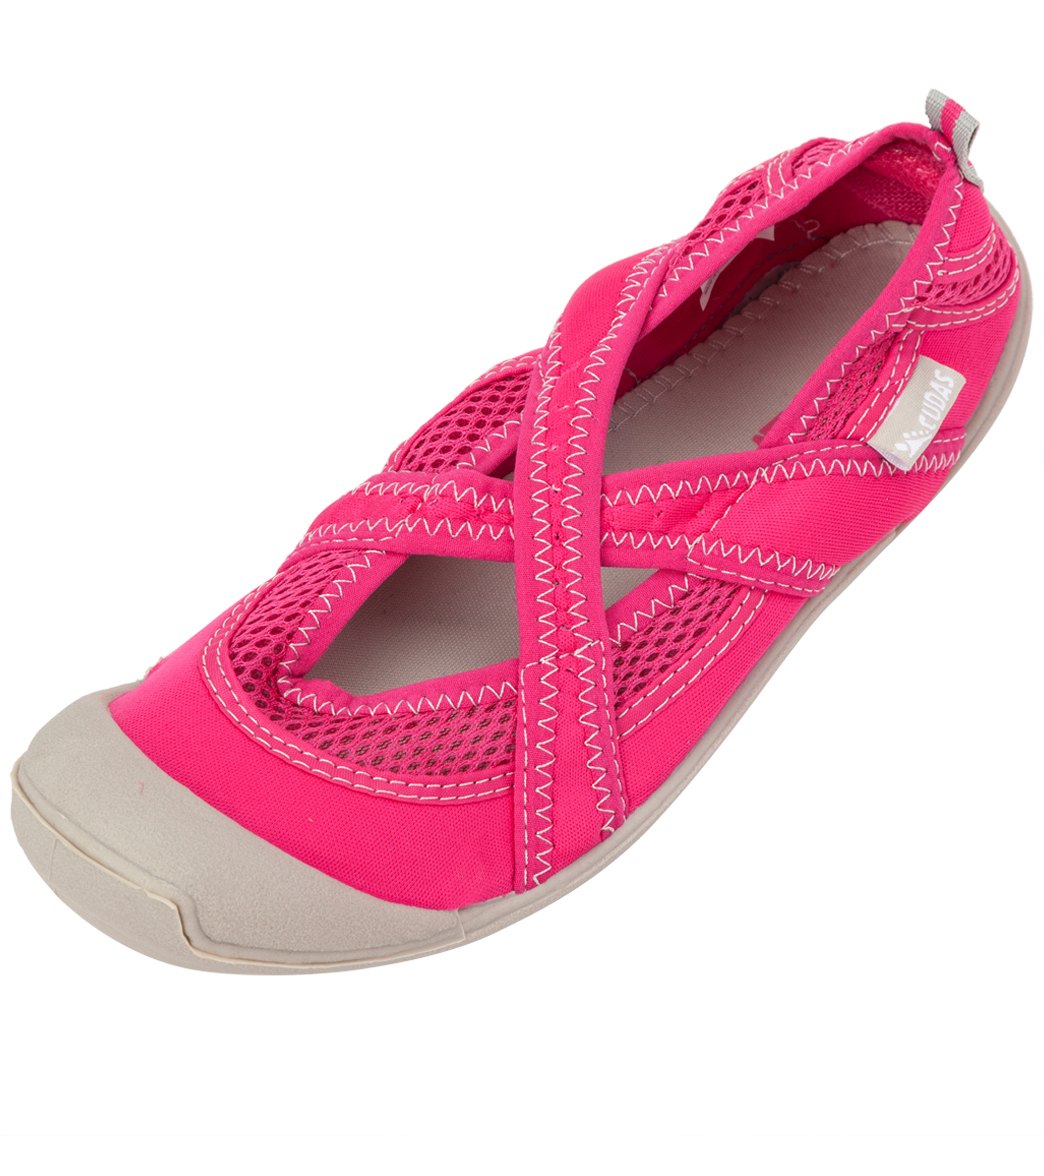 Cudas Women's Shasta Water Shoes - Pink 11 - Swimoutlet.com